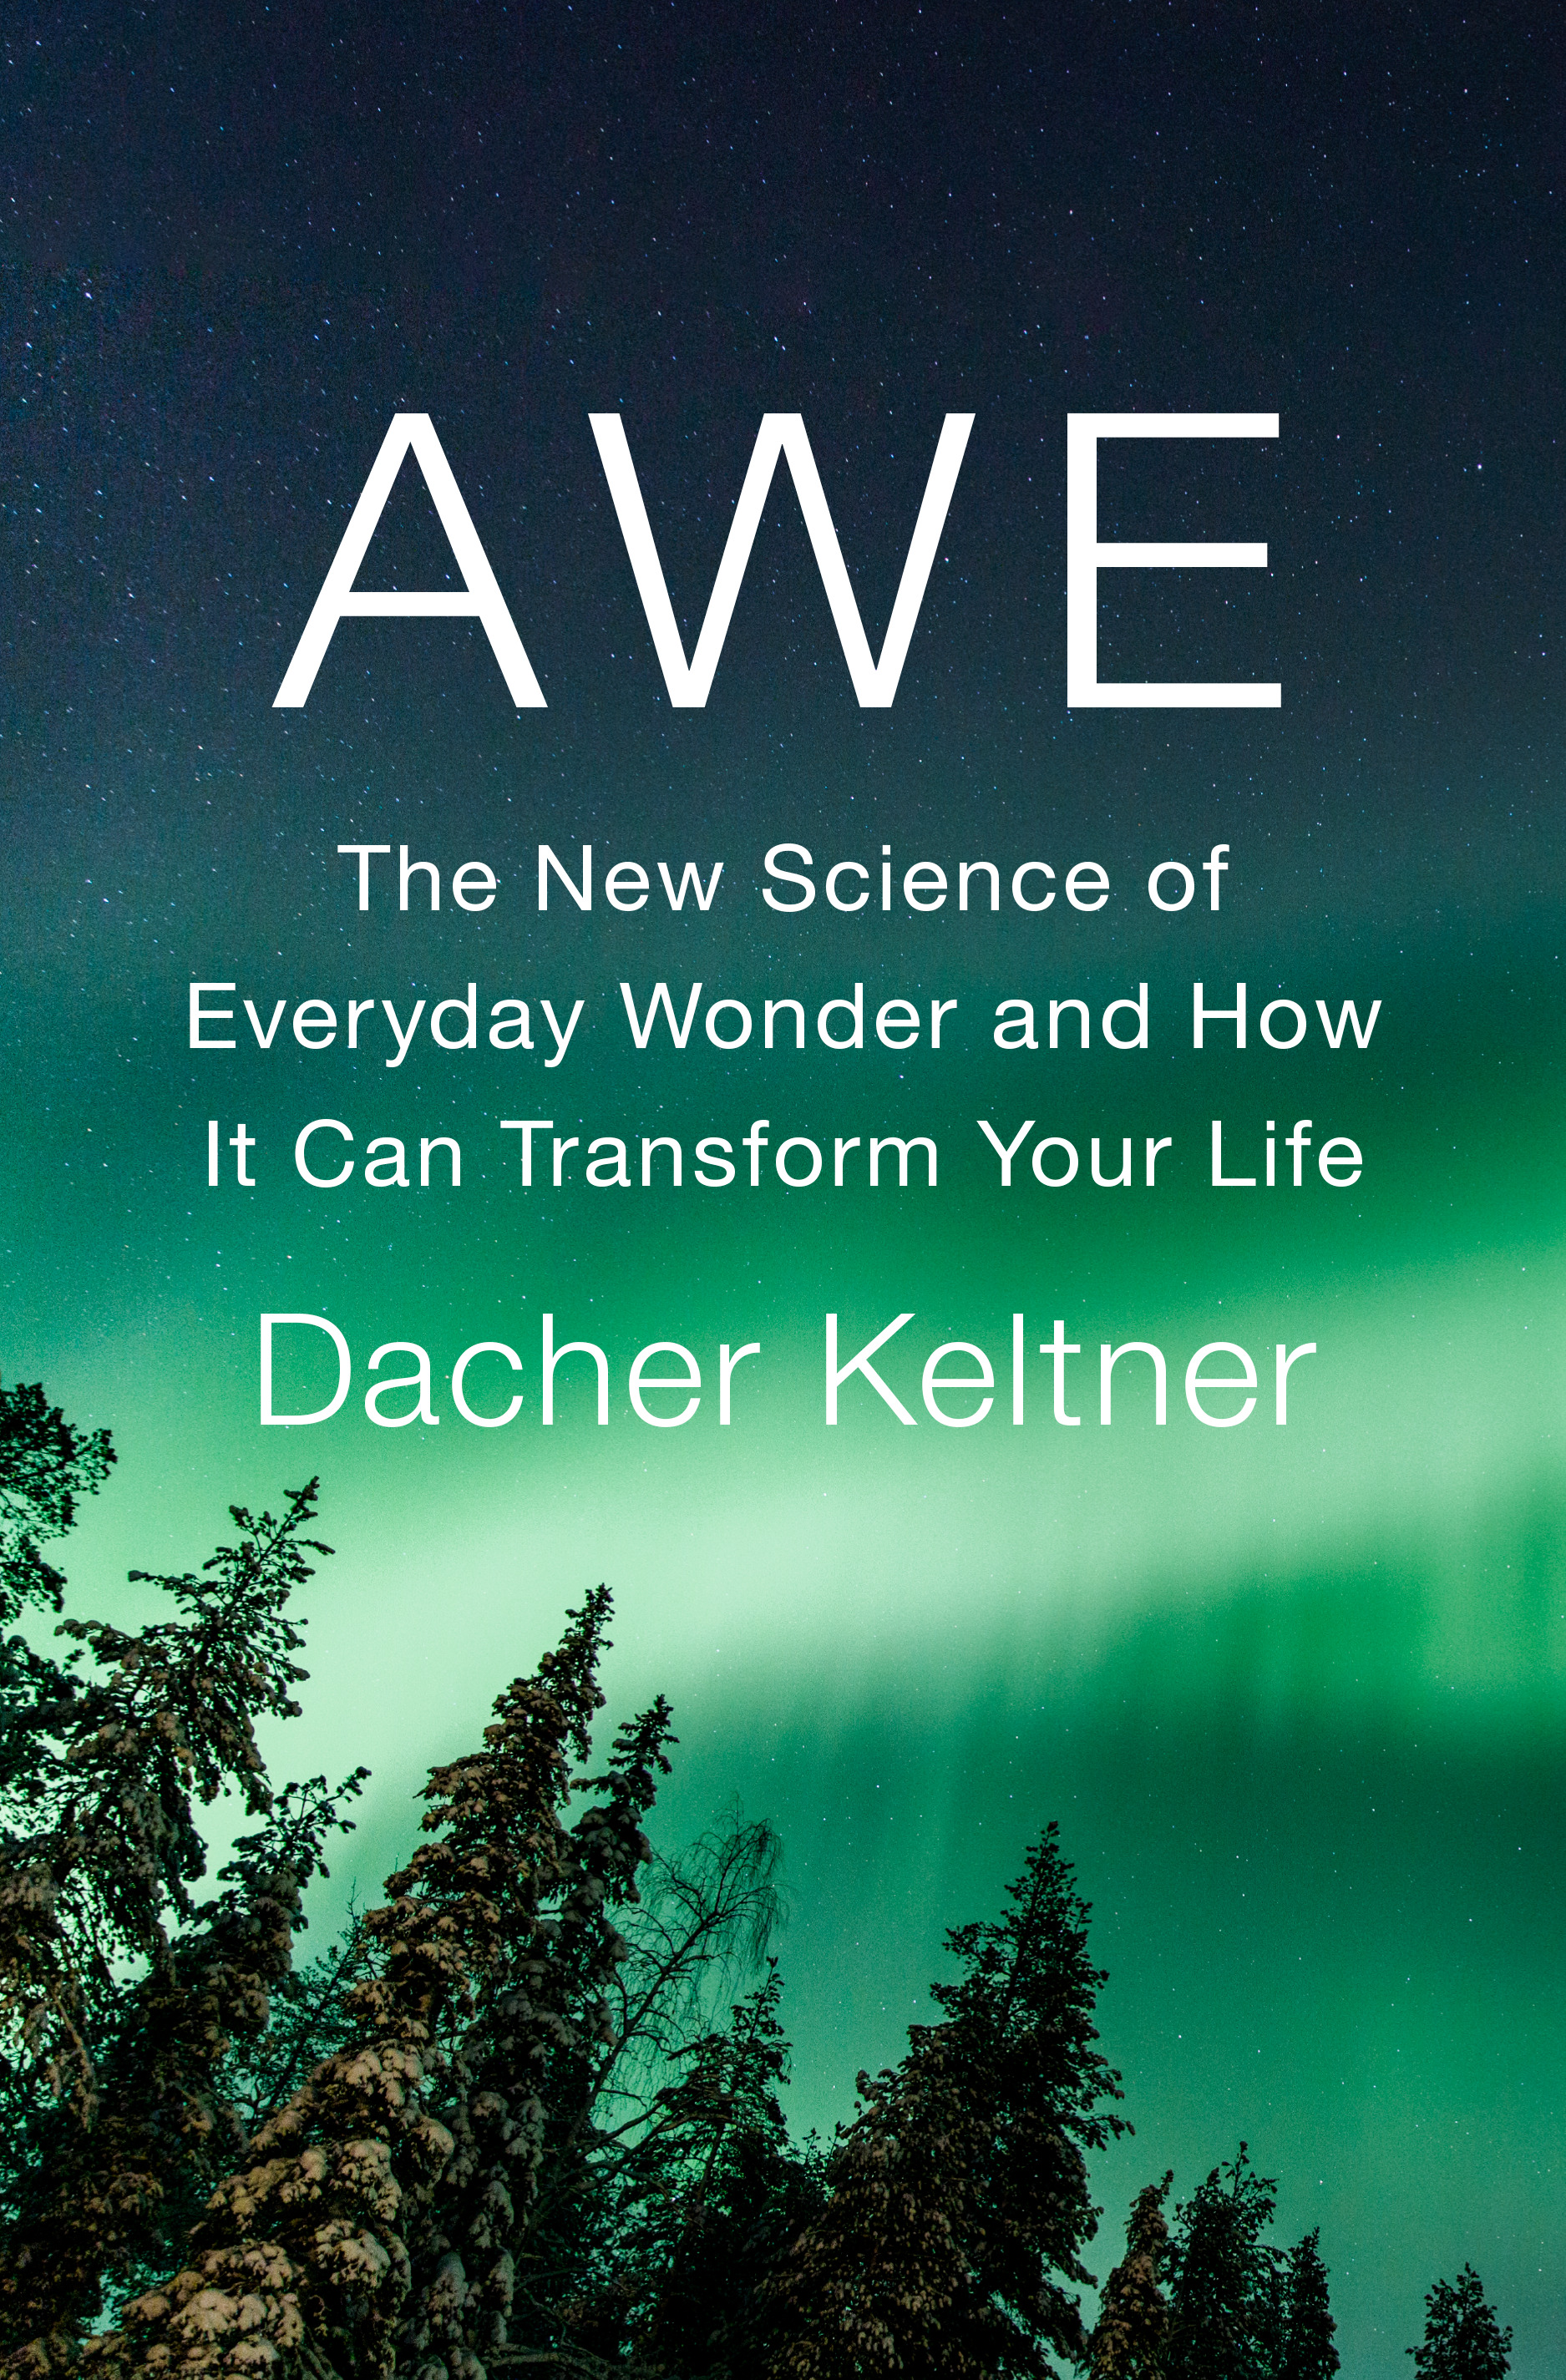 "Awe" book cover